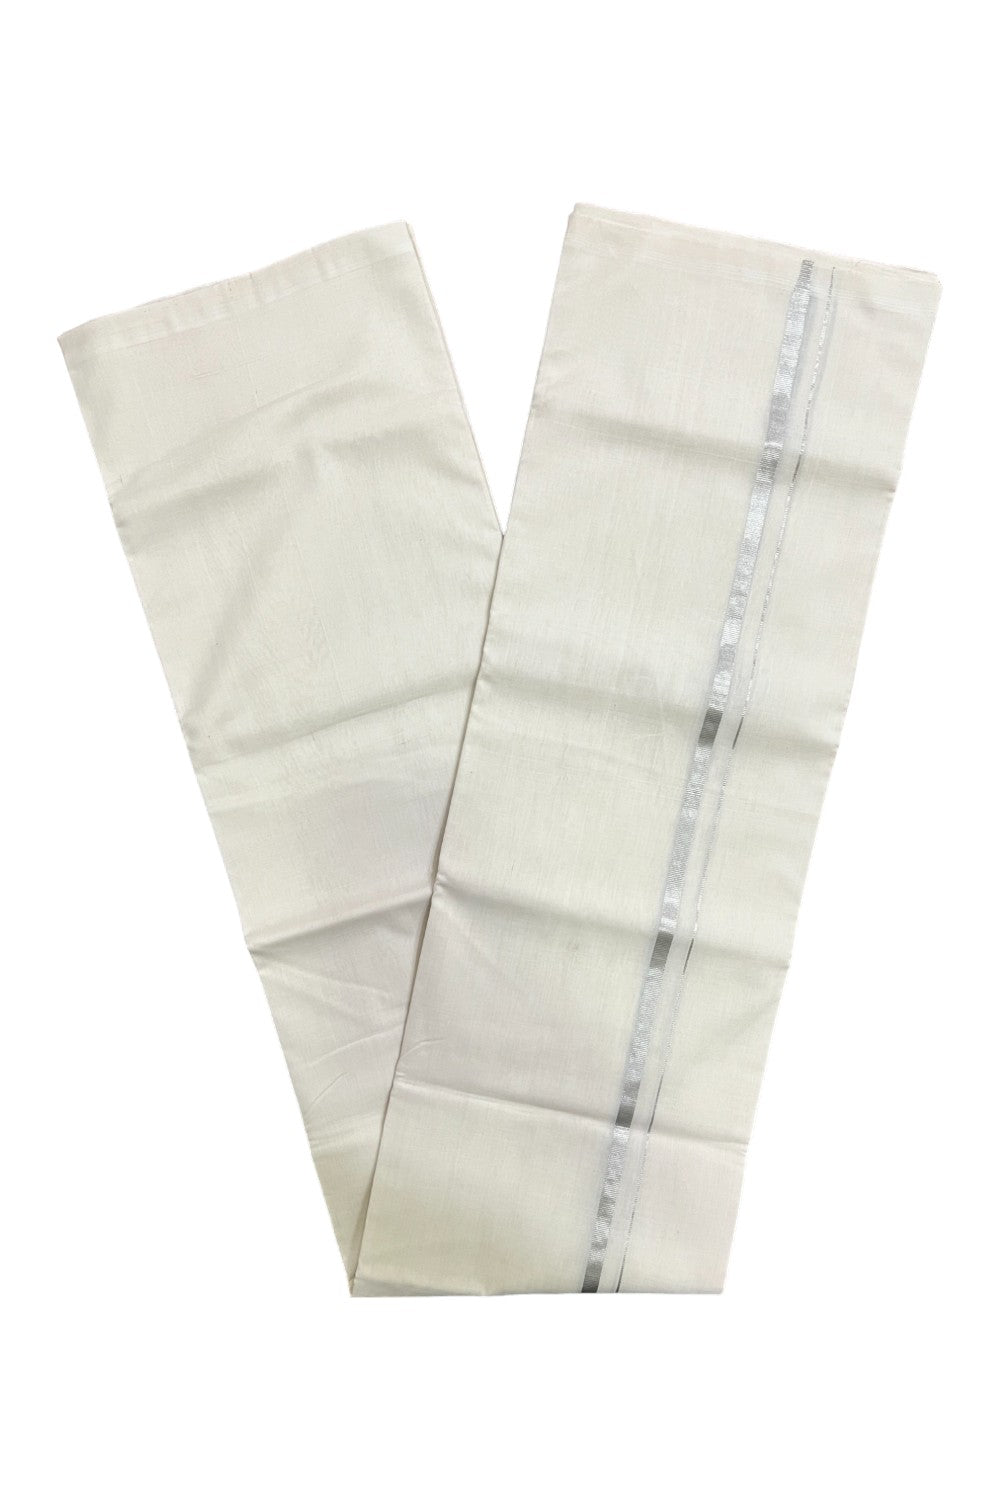 Premium Balaramapuram Handloom Unakkupaavu Cotton Double Mundu with 0.50 inch Silver Kasavu Border